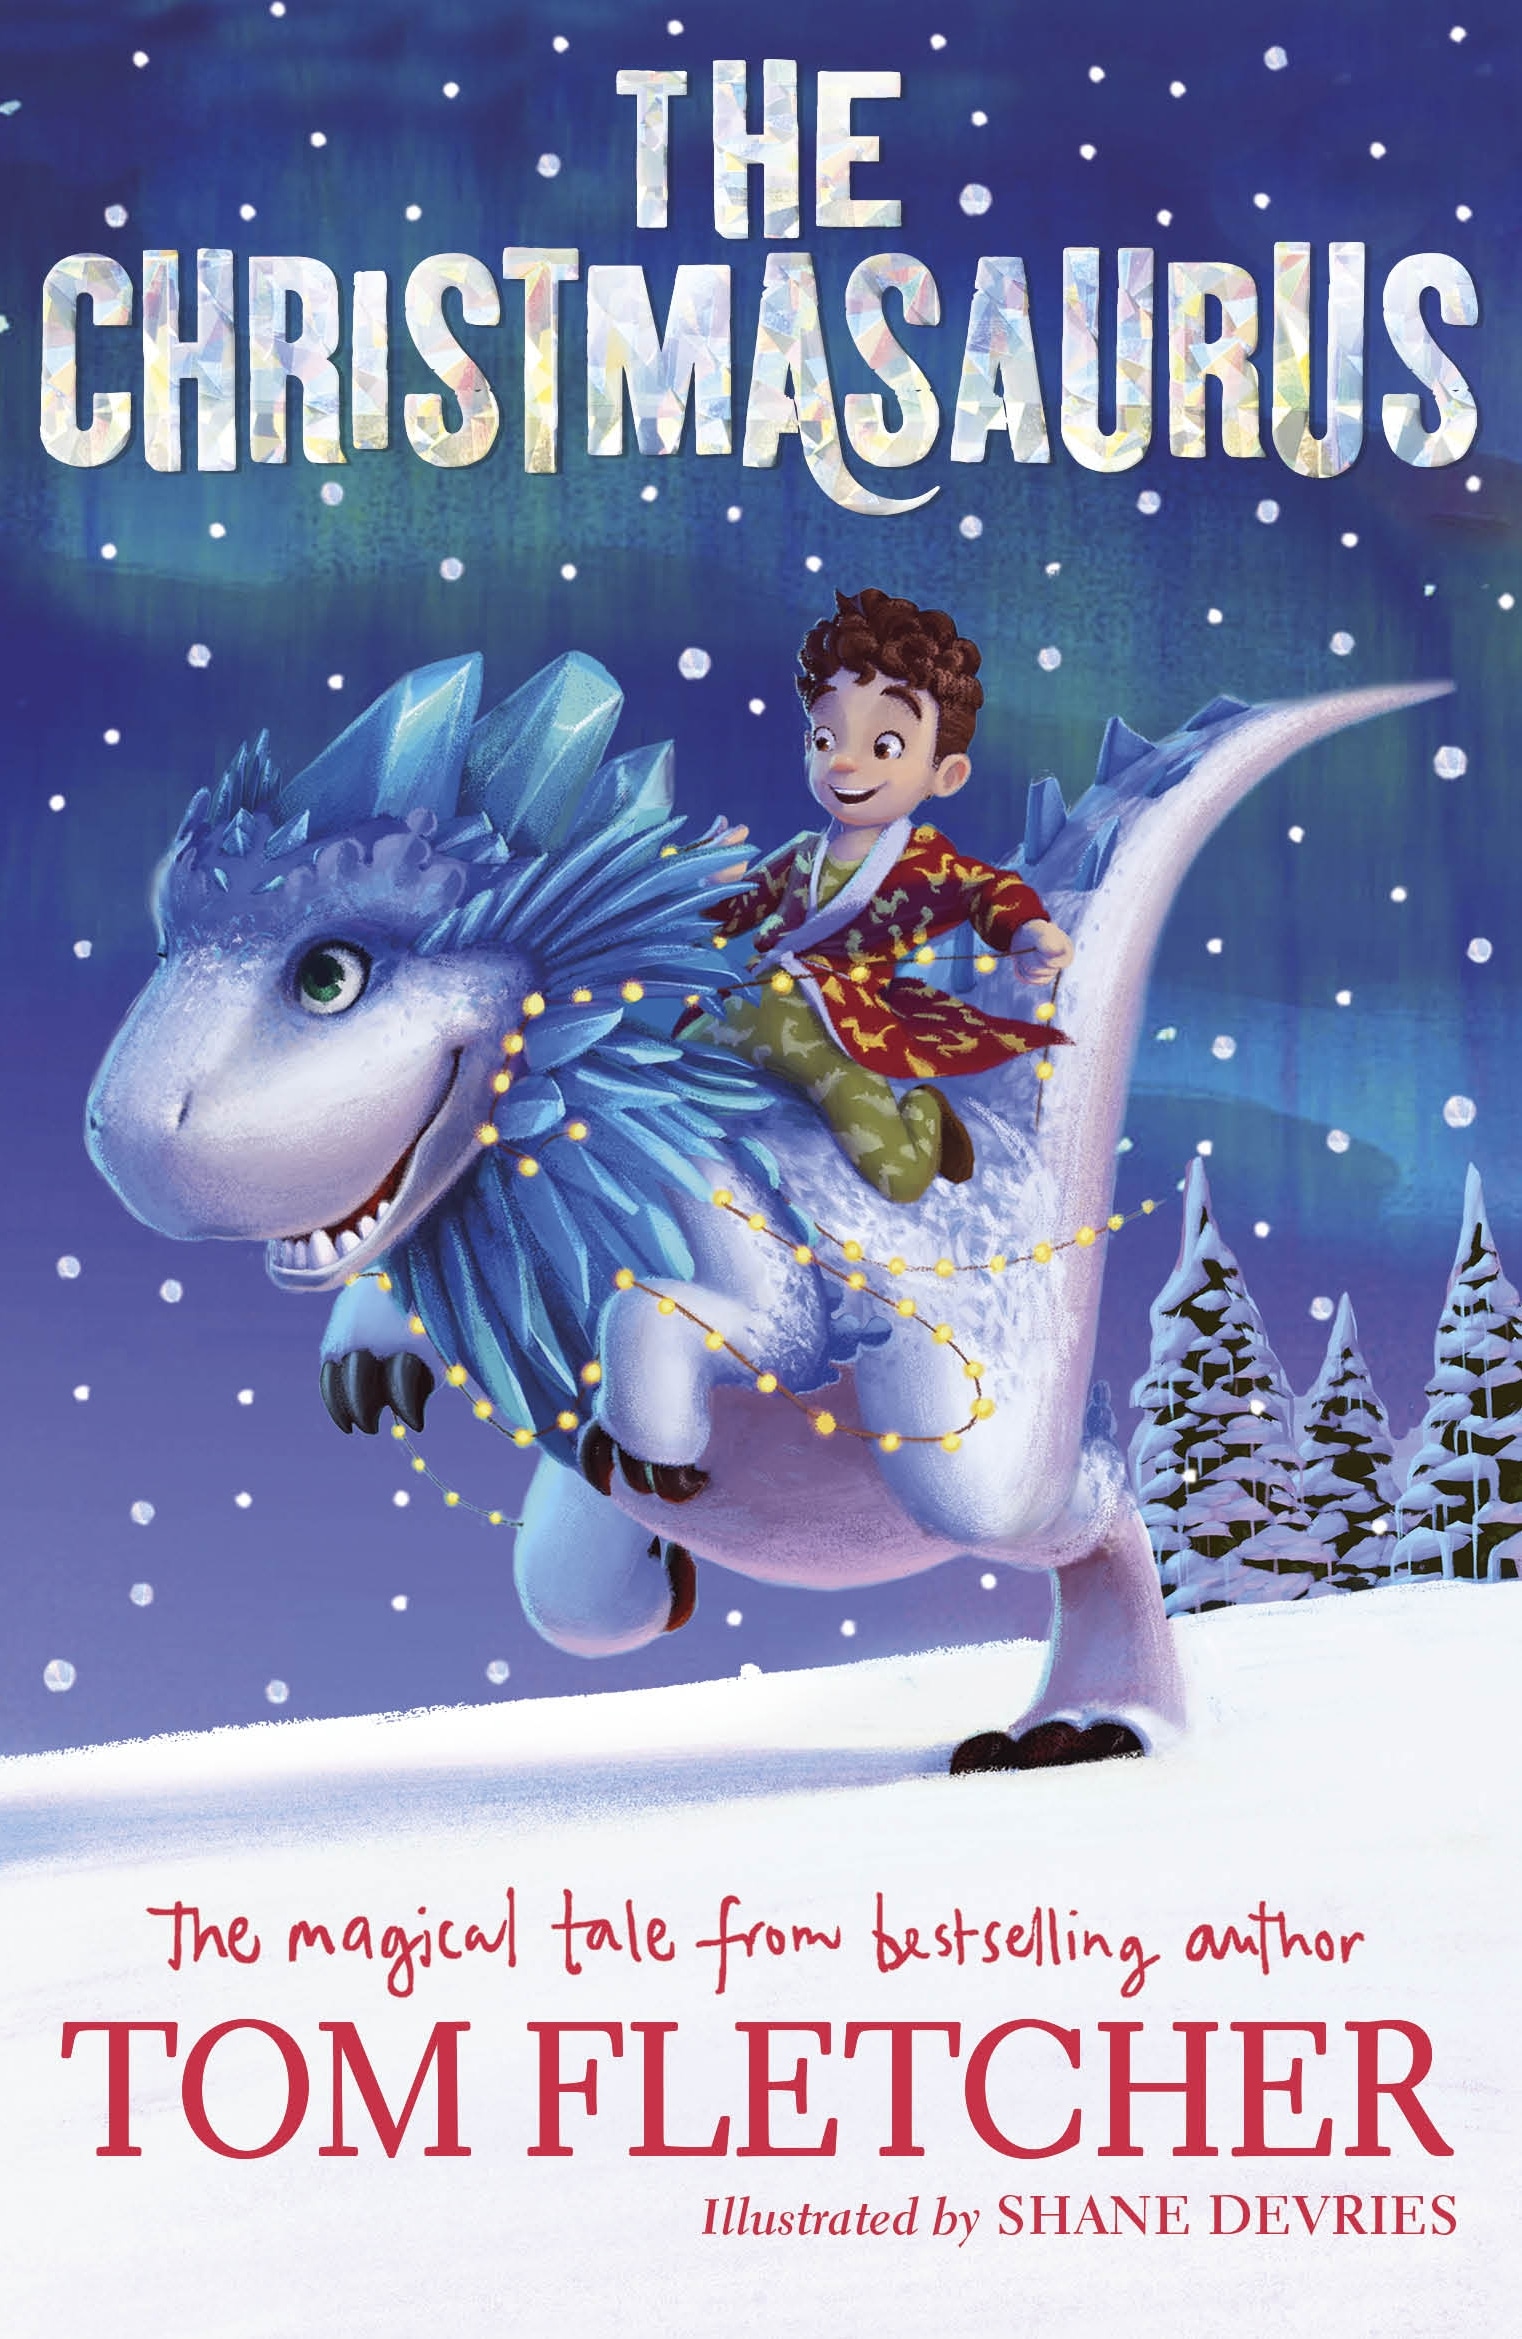 Book “The Christmasaurus” by Tom Fletcher — November 2, 2017